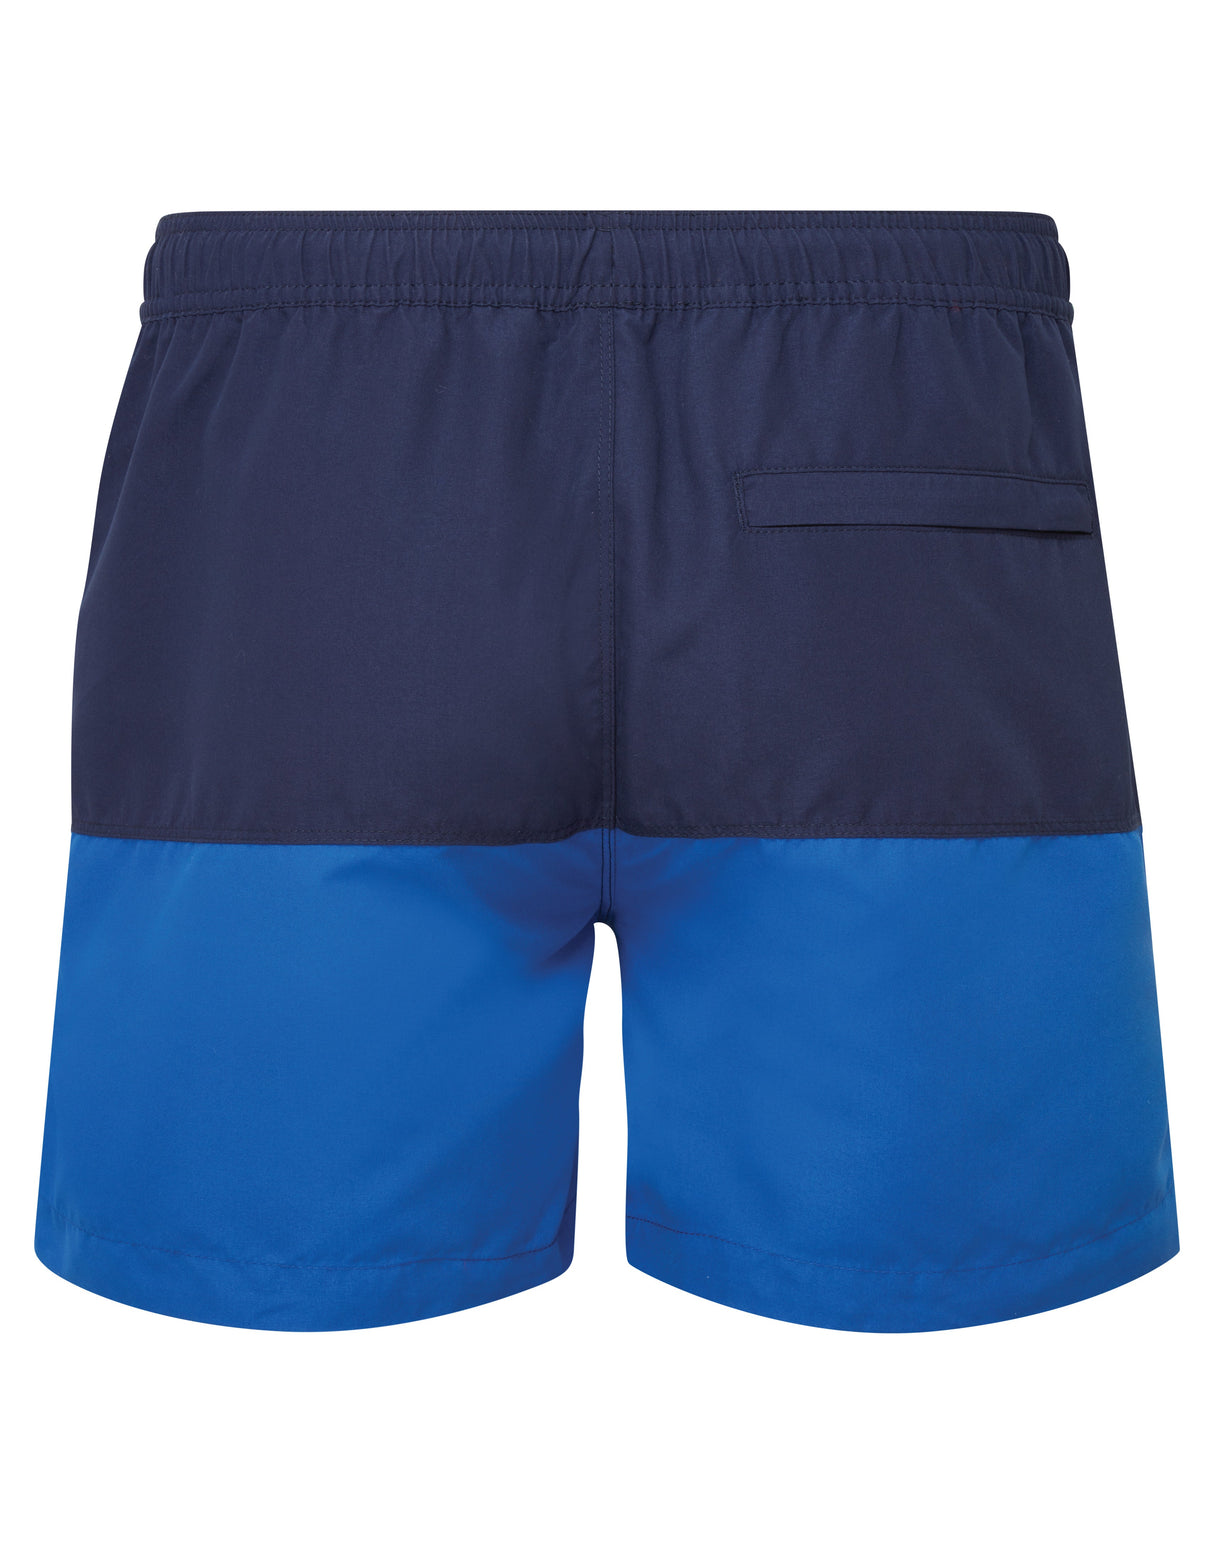 Asquith & Fox Block Colour Swim Shorts